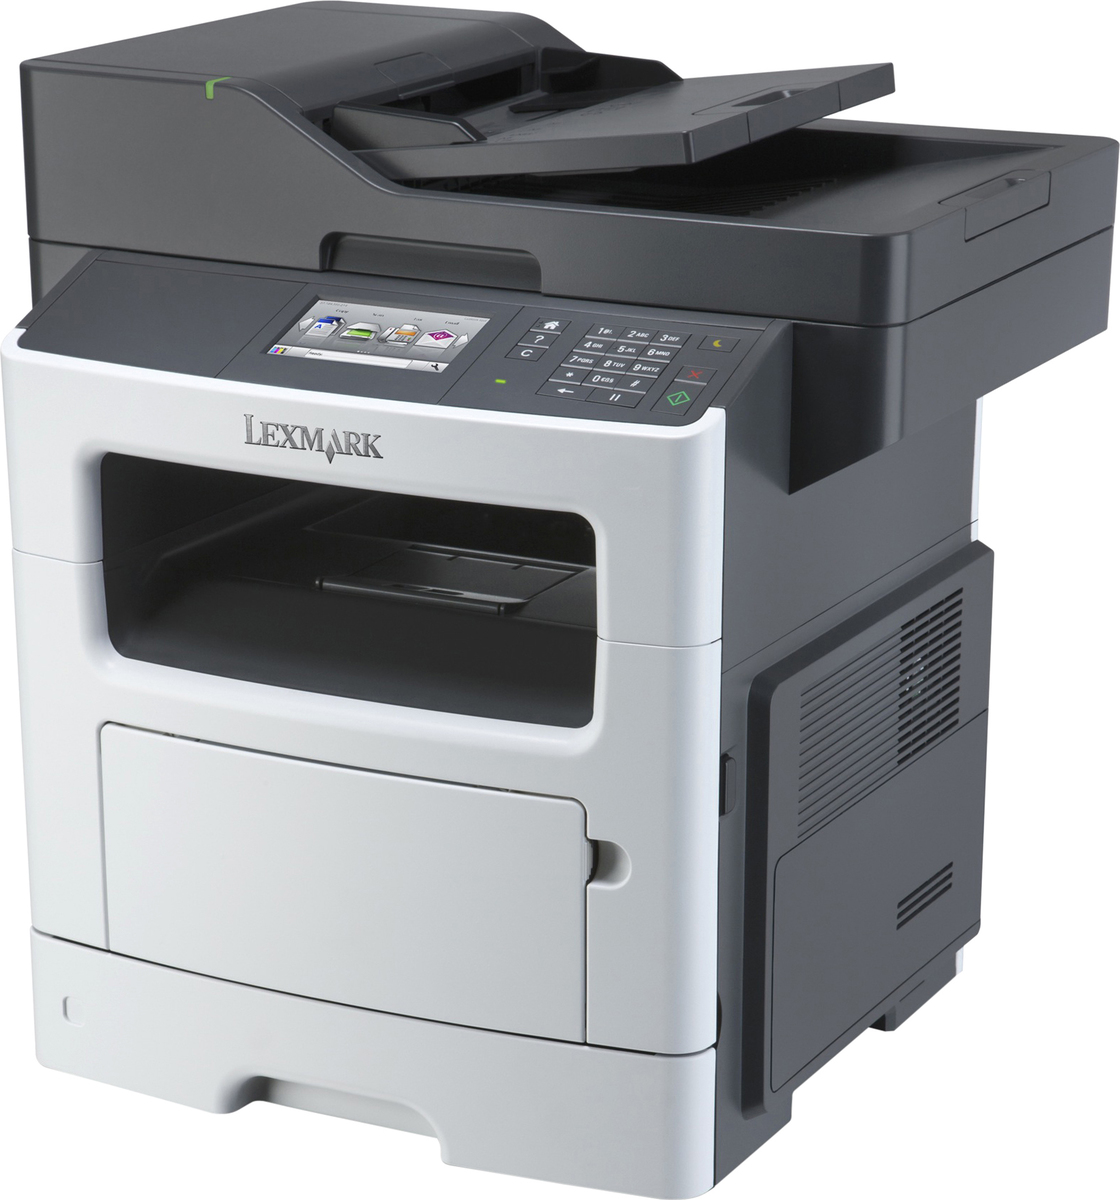 B/W Printer Lexmark MX511de Used A Ethernet Usb &lt;100K pages A4 A5 B/W Laser 4.3&quot;